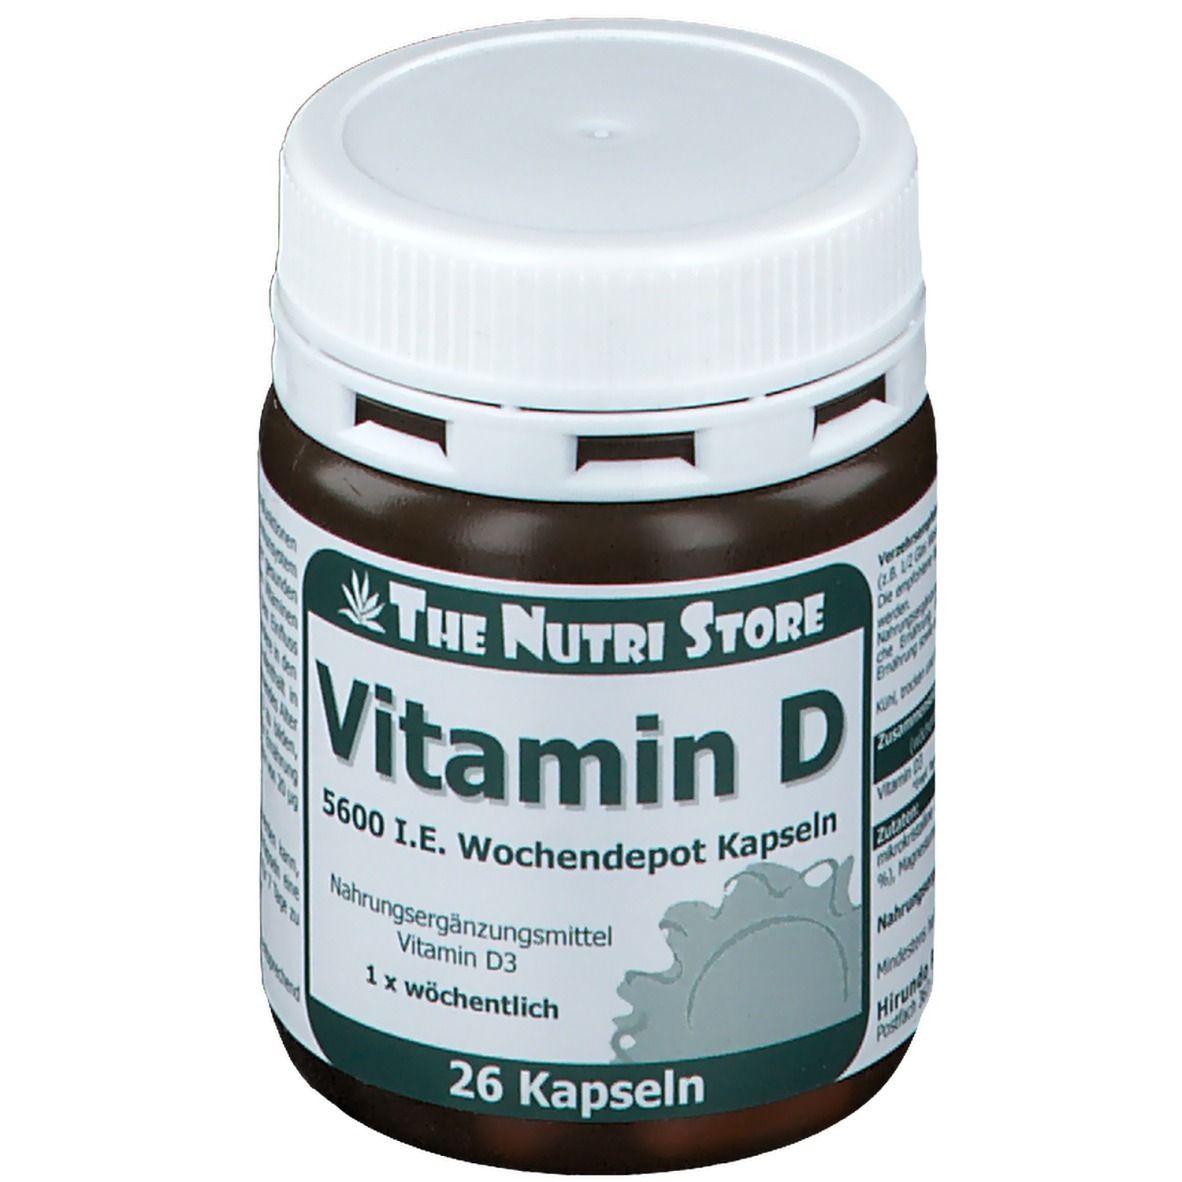 The Nutri Store Vitamin D Wochendepot Kapseln